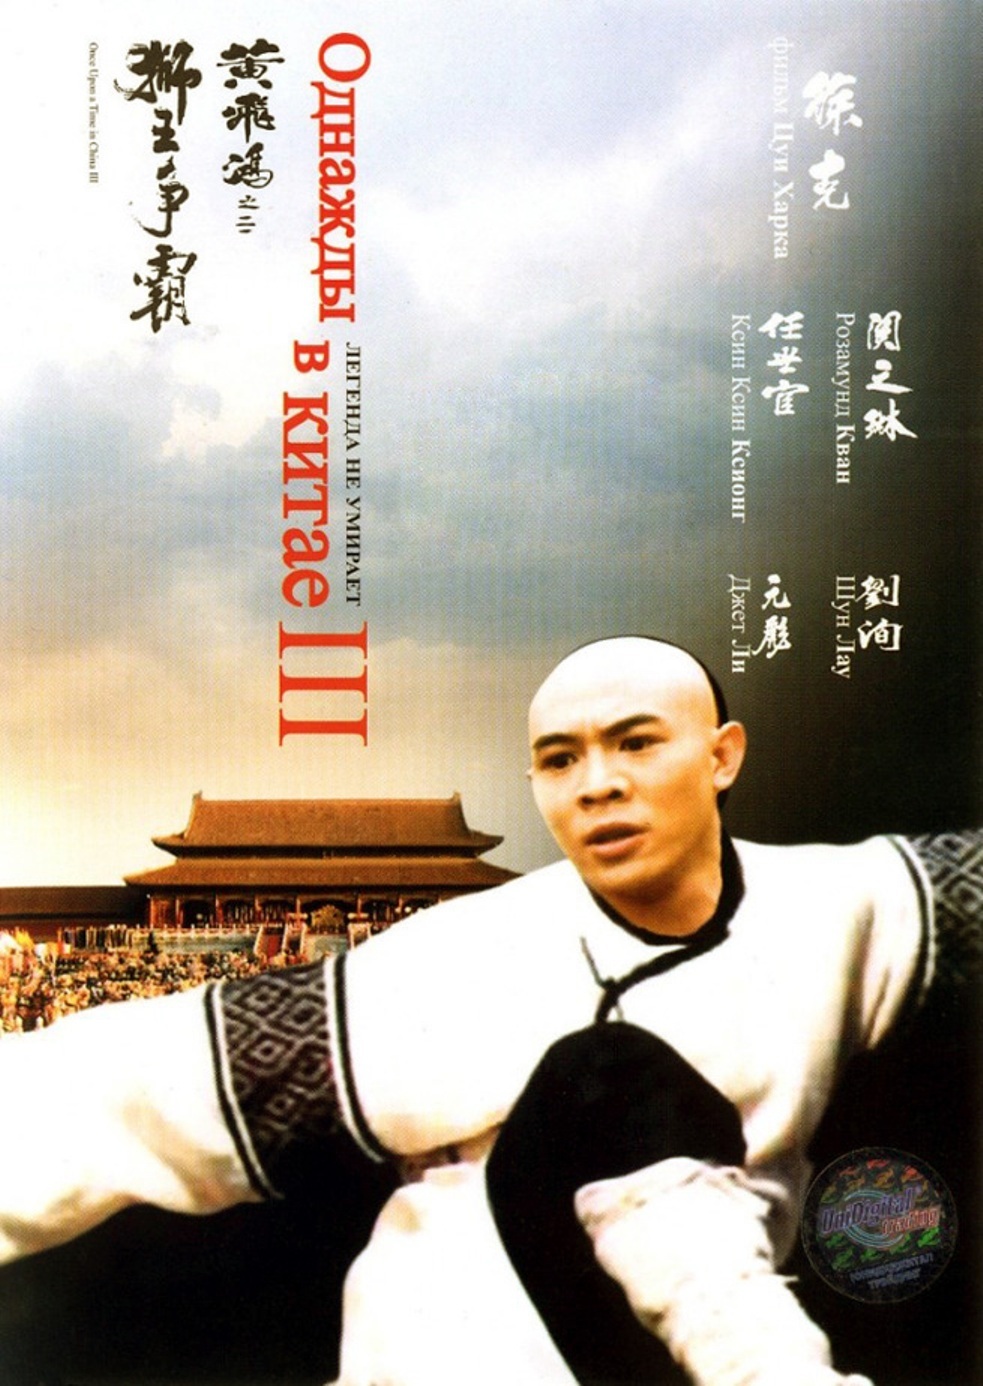 Series of films Once Upon a Time in China / Once Upon a Time in China - Jet Li, Wong Fei Hung, Tsui Hark, Sammo Hung, Asian cinema, Hong kong cinema, Боевики, Video, Longpost